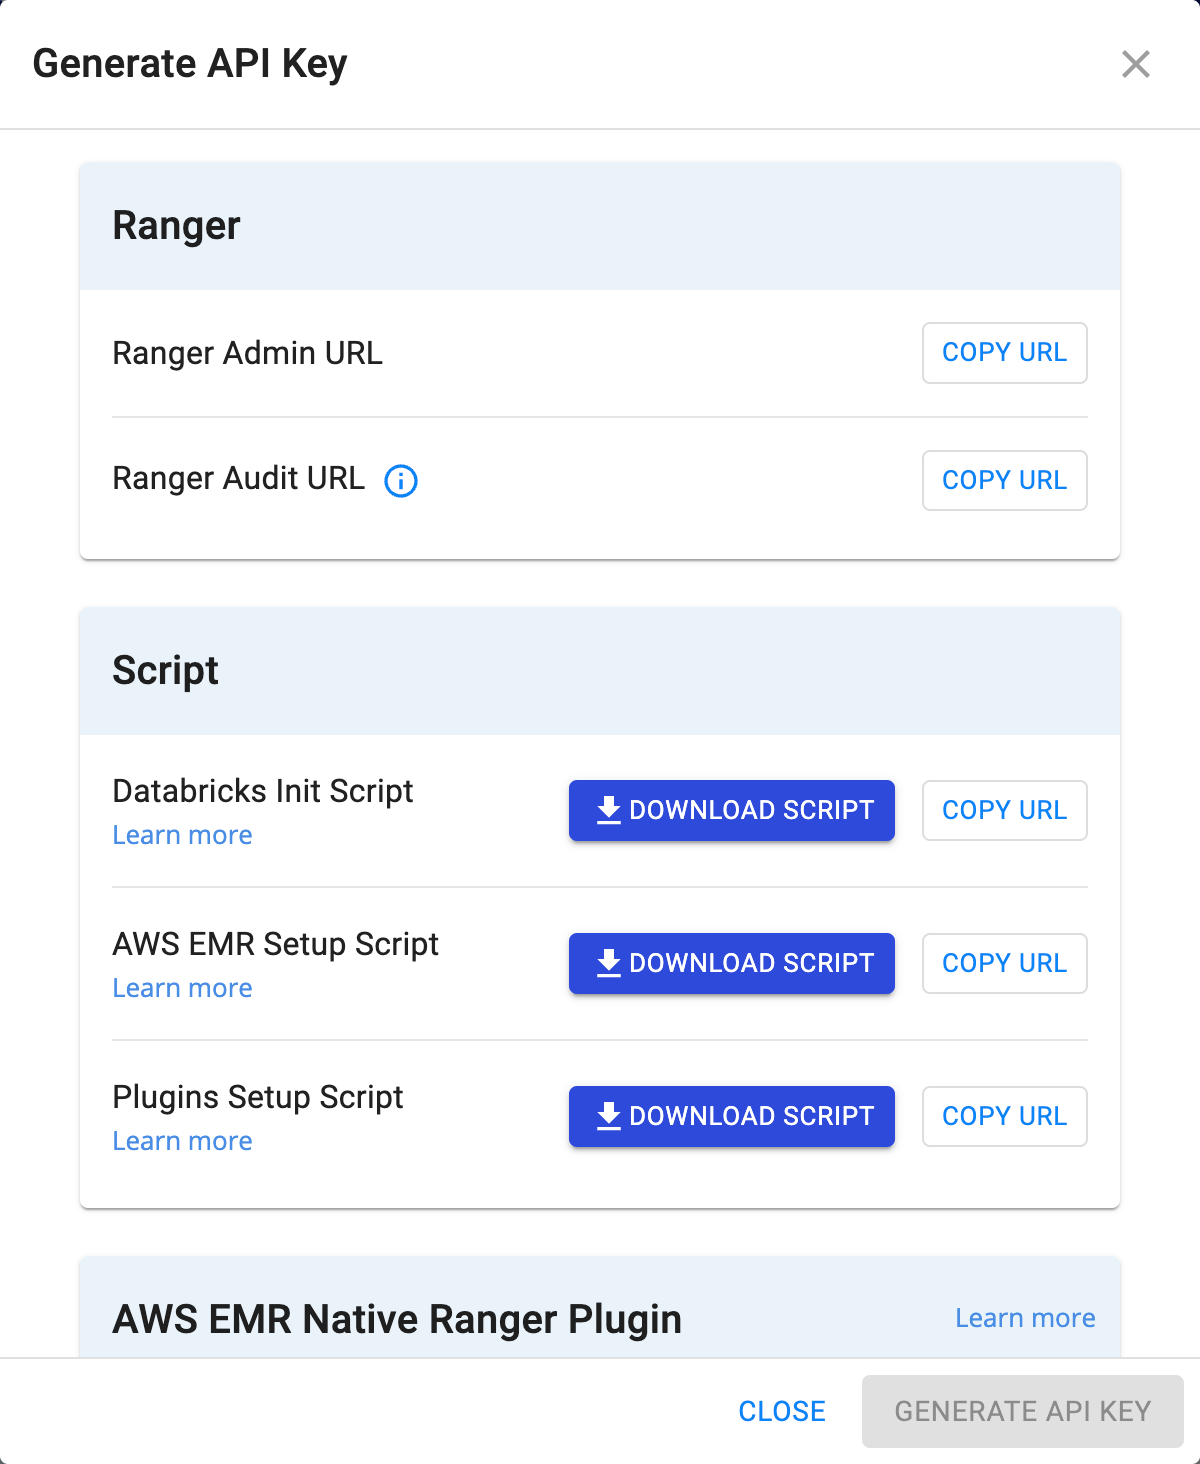 Generate API key using Ranger Admin URL